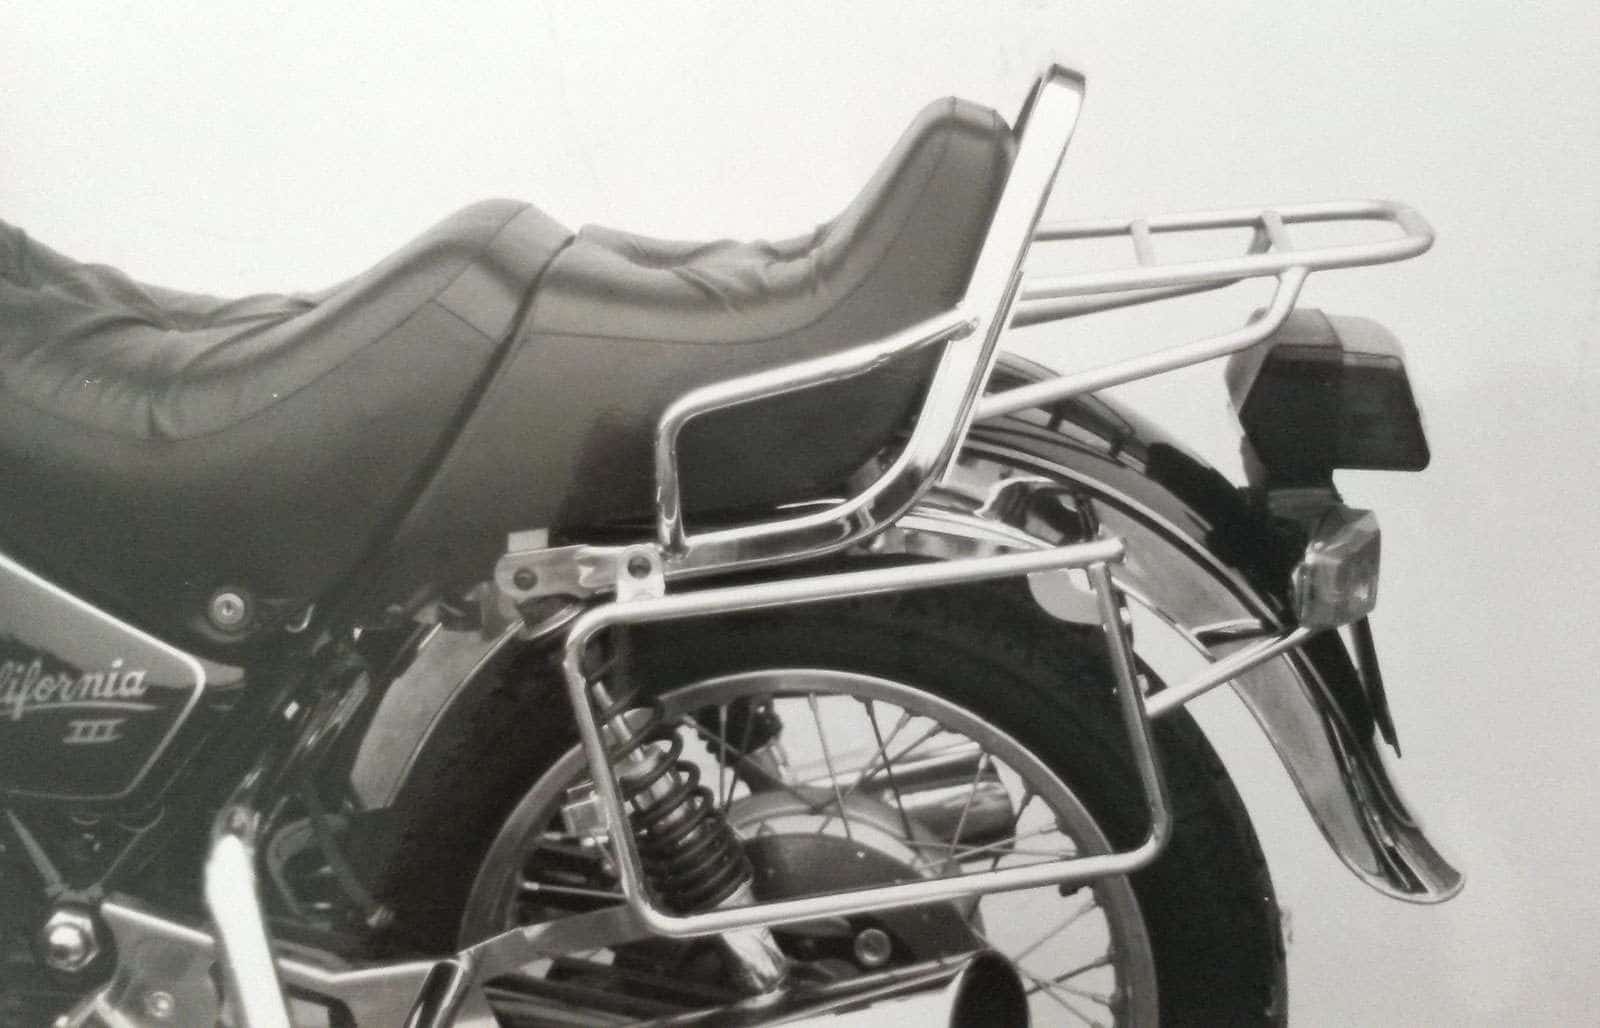 Sidecarrier permanent mounted chrome for Moto Guzzi California III (1987-1994)